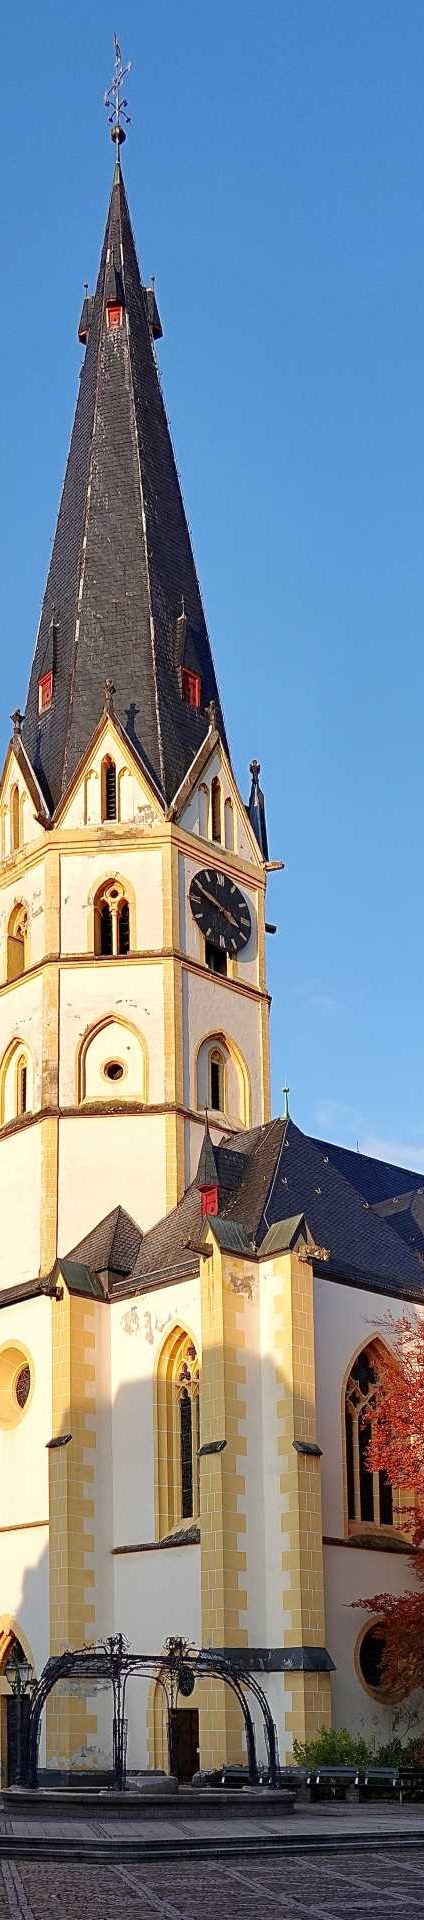 Pfarrkirche St. Laurentius, Ahrweiler